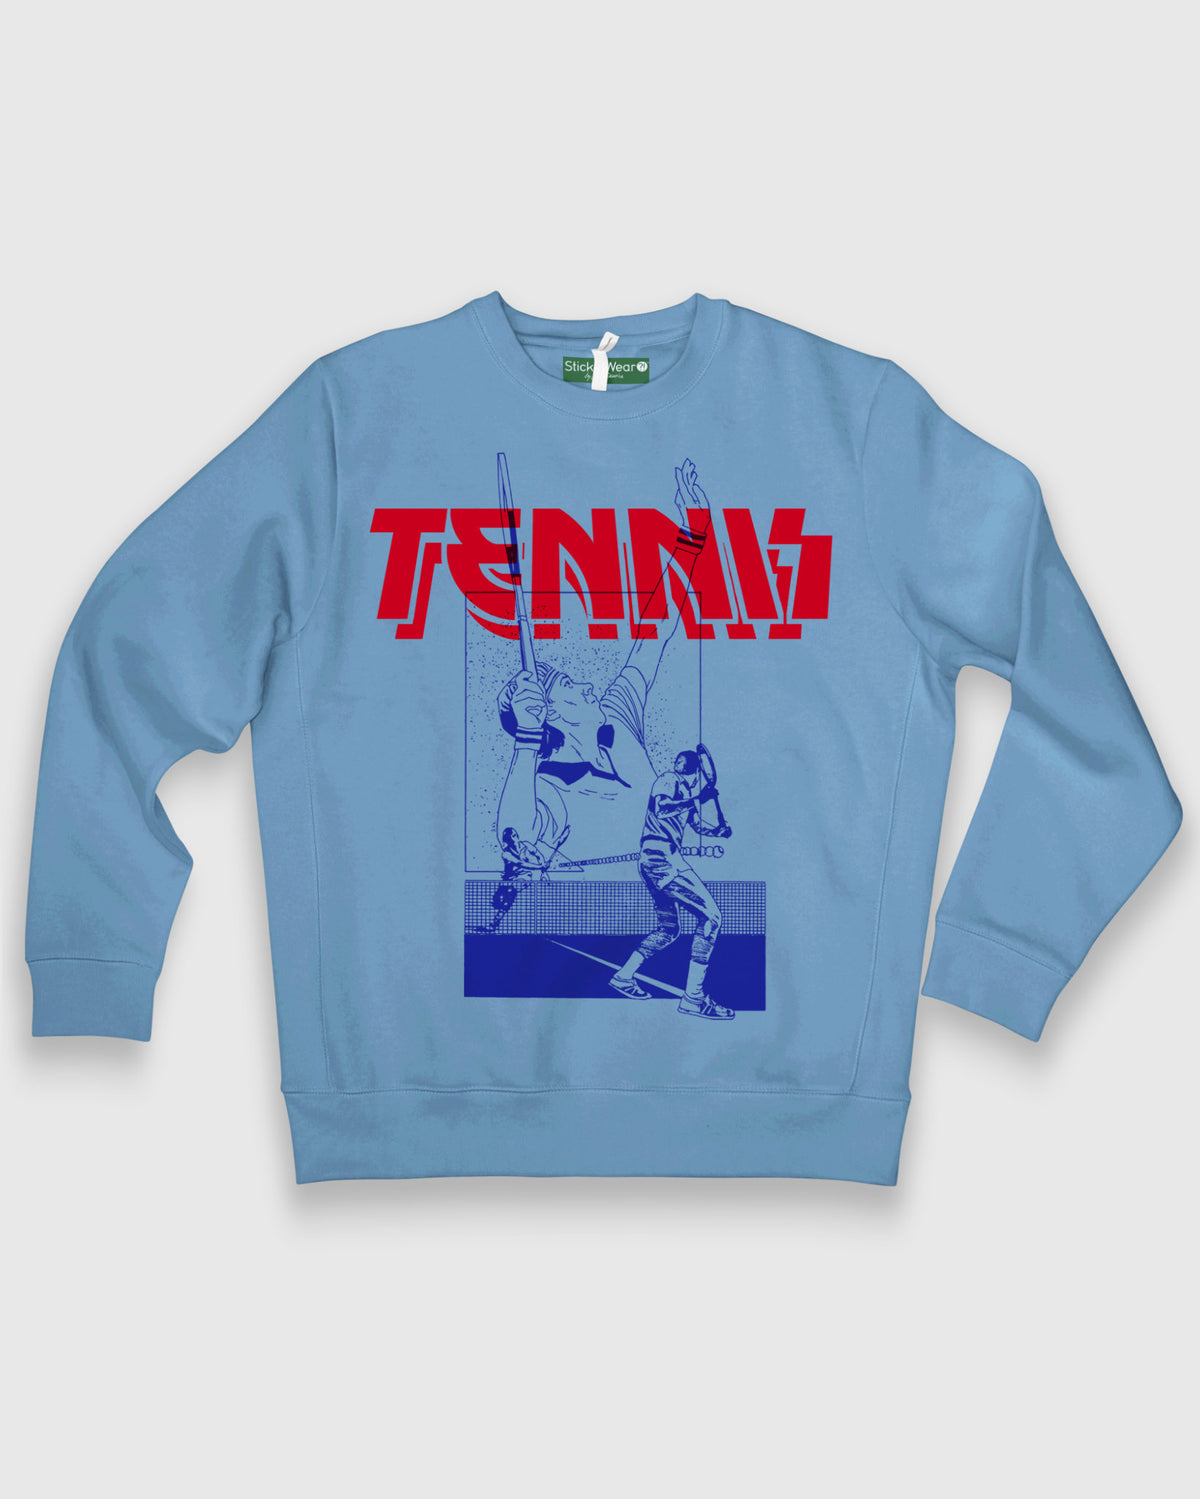 COUNTRY CLUB Luxury Skybox Tennis Sweatshirt